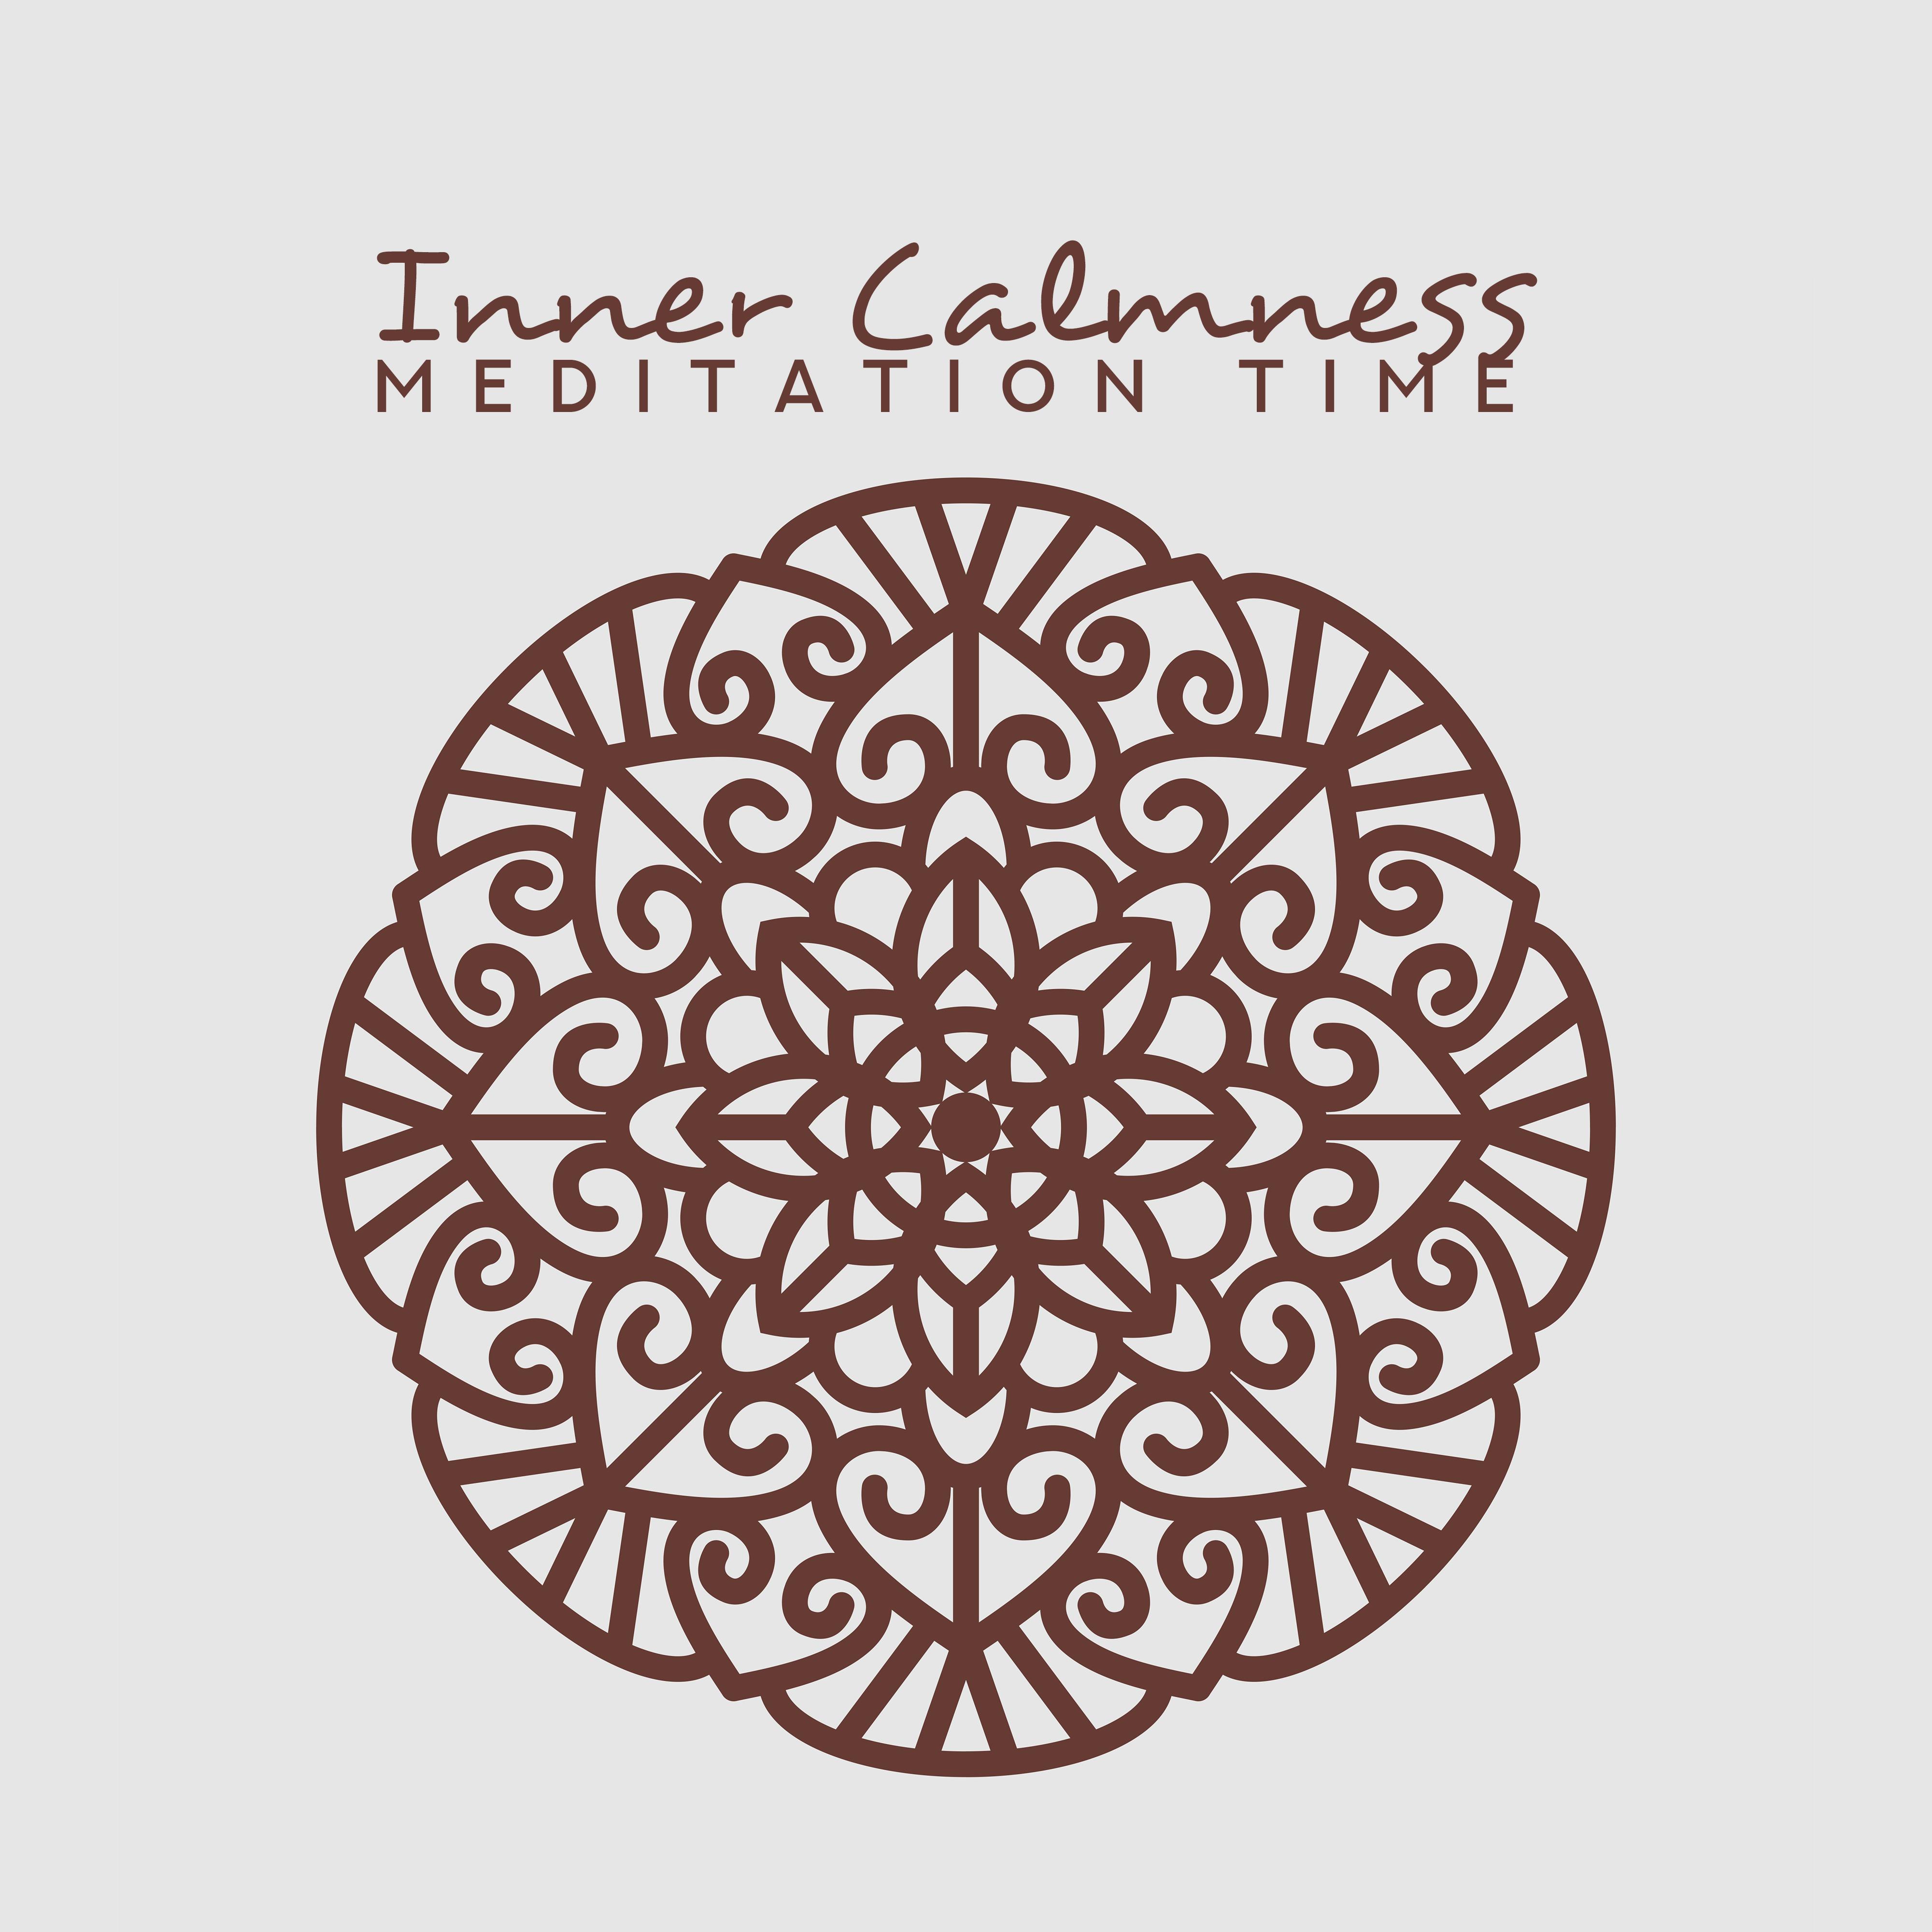 Inner Calmness Meditation Time: 15 Fresh New Age Music 2019, Yoga Training Songs, Deep Relaxation, Chakra Healing, Asian Zen